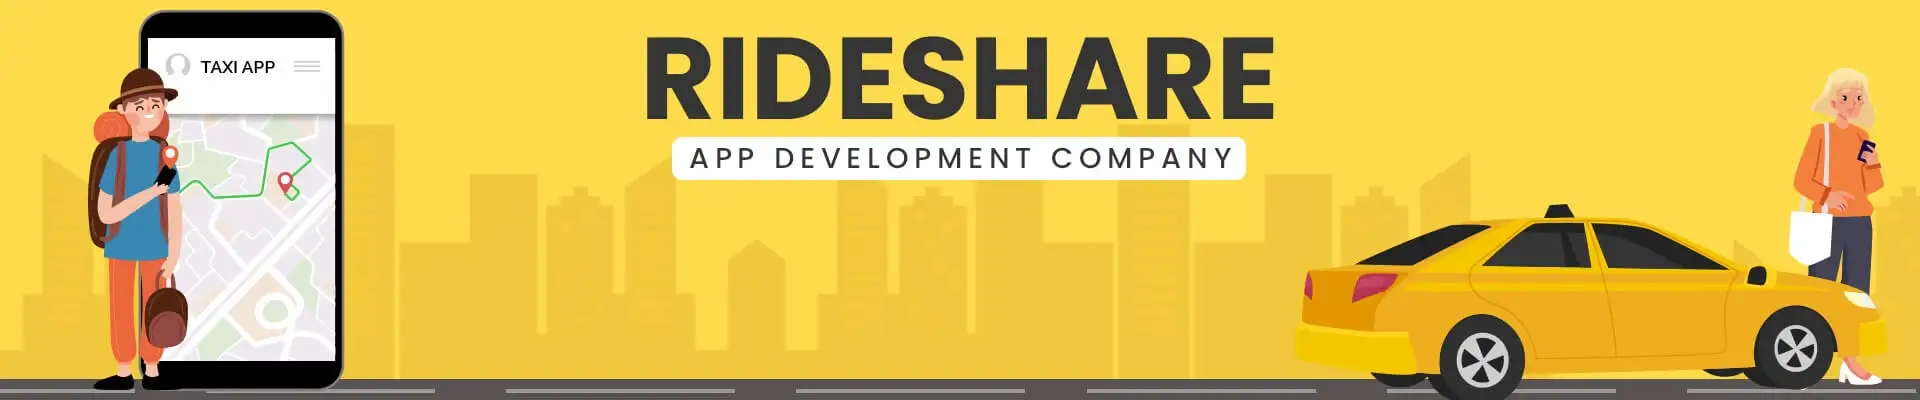 Best RideShare App Development Company | RideShare App Developers For Hire